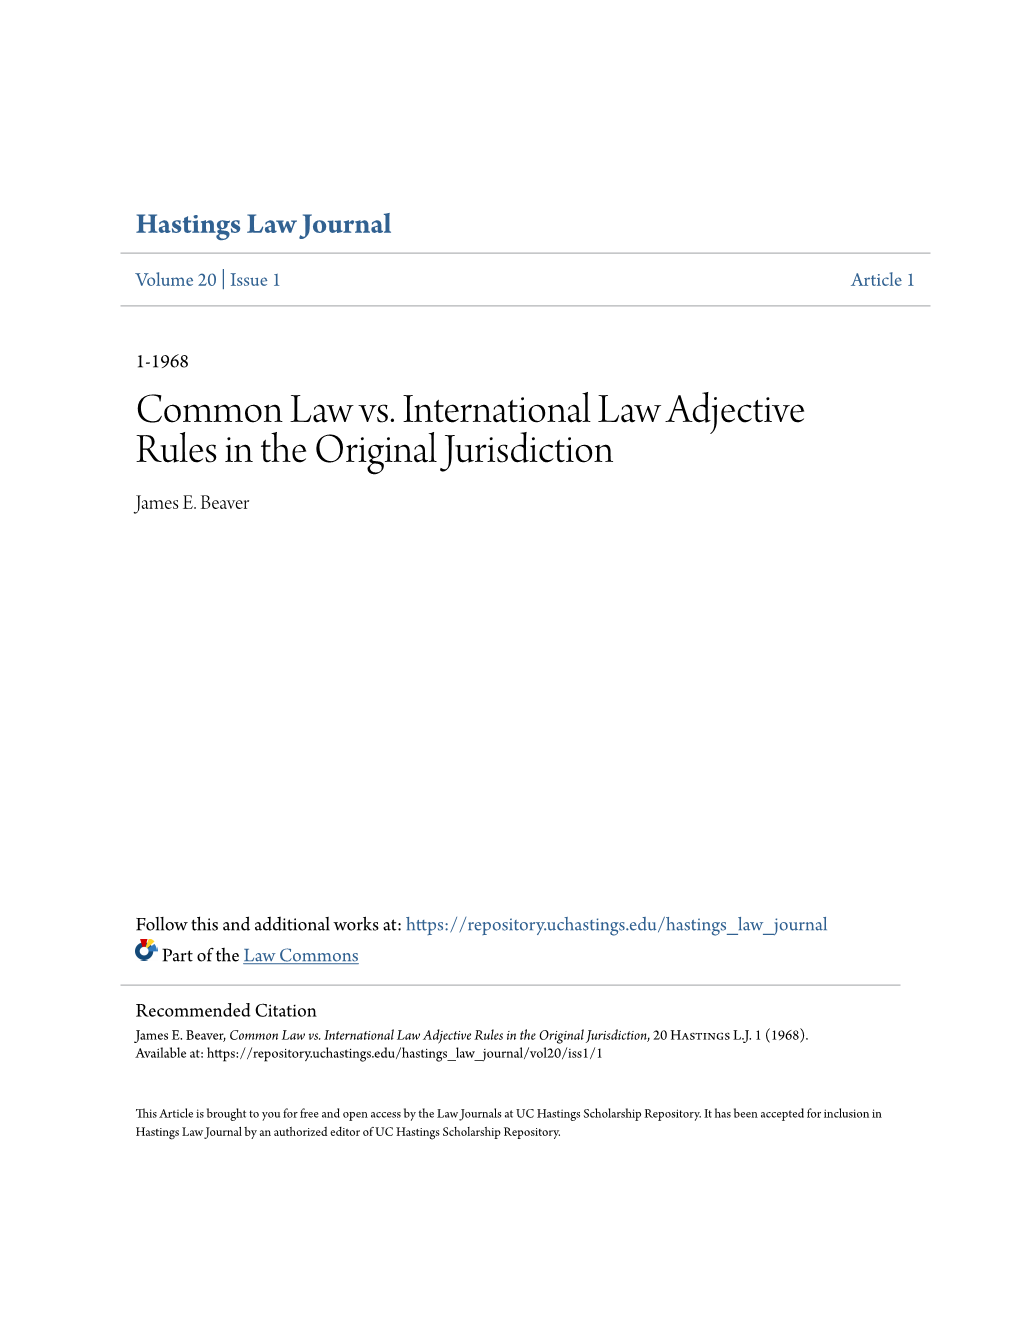 Common Law Vs. International Law Adjective Rules in the Original Jurisdiction James E